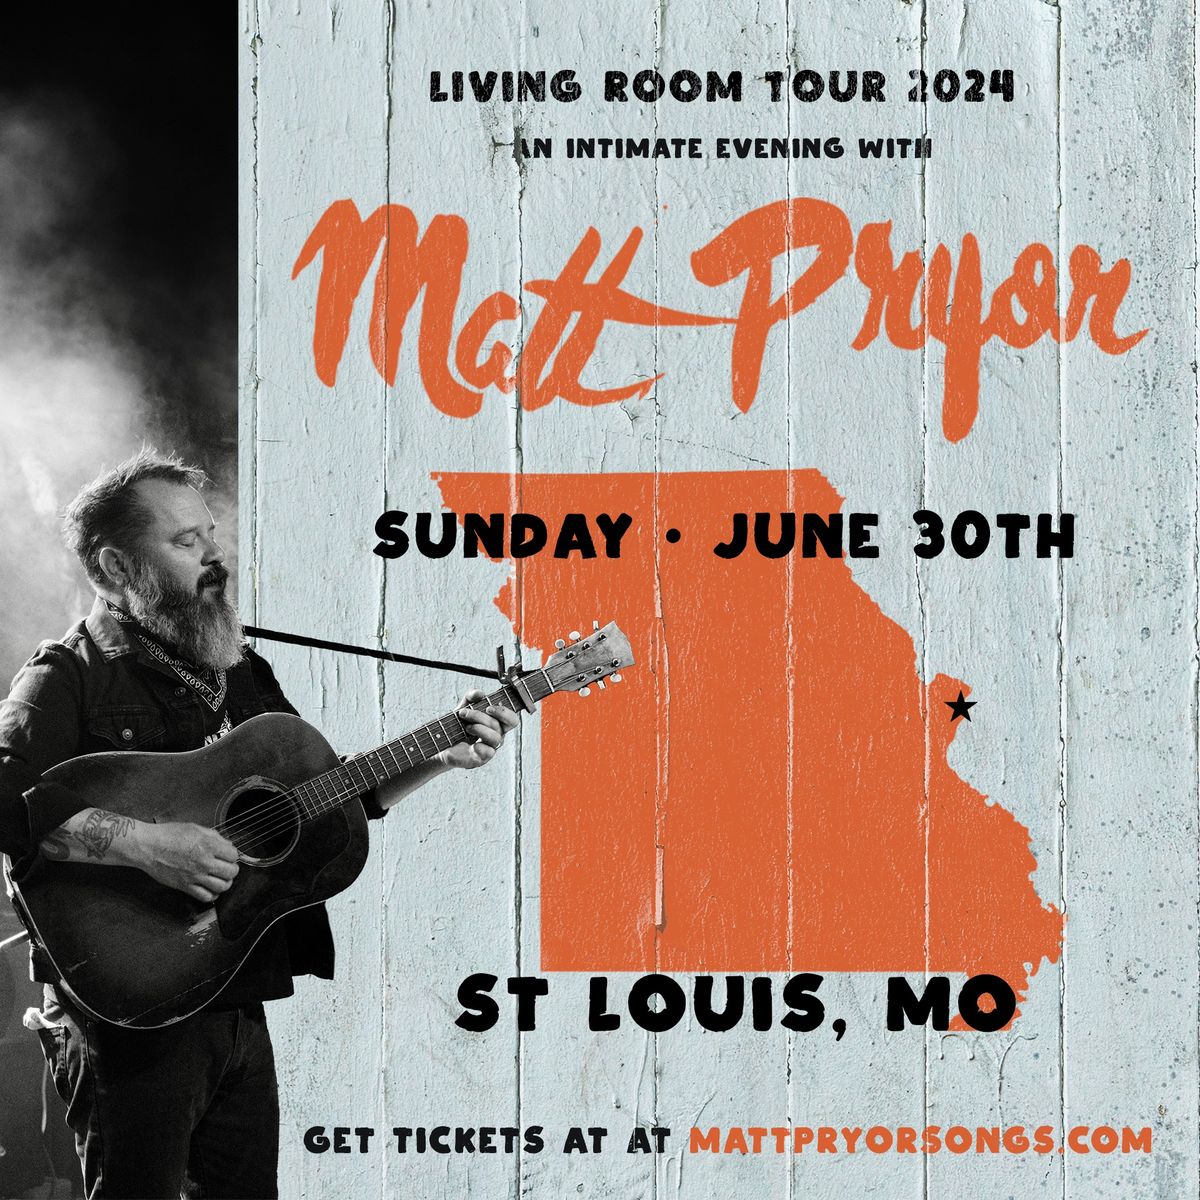 St. Louis, MO - Matt Pryor Living Room Tour!